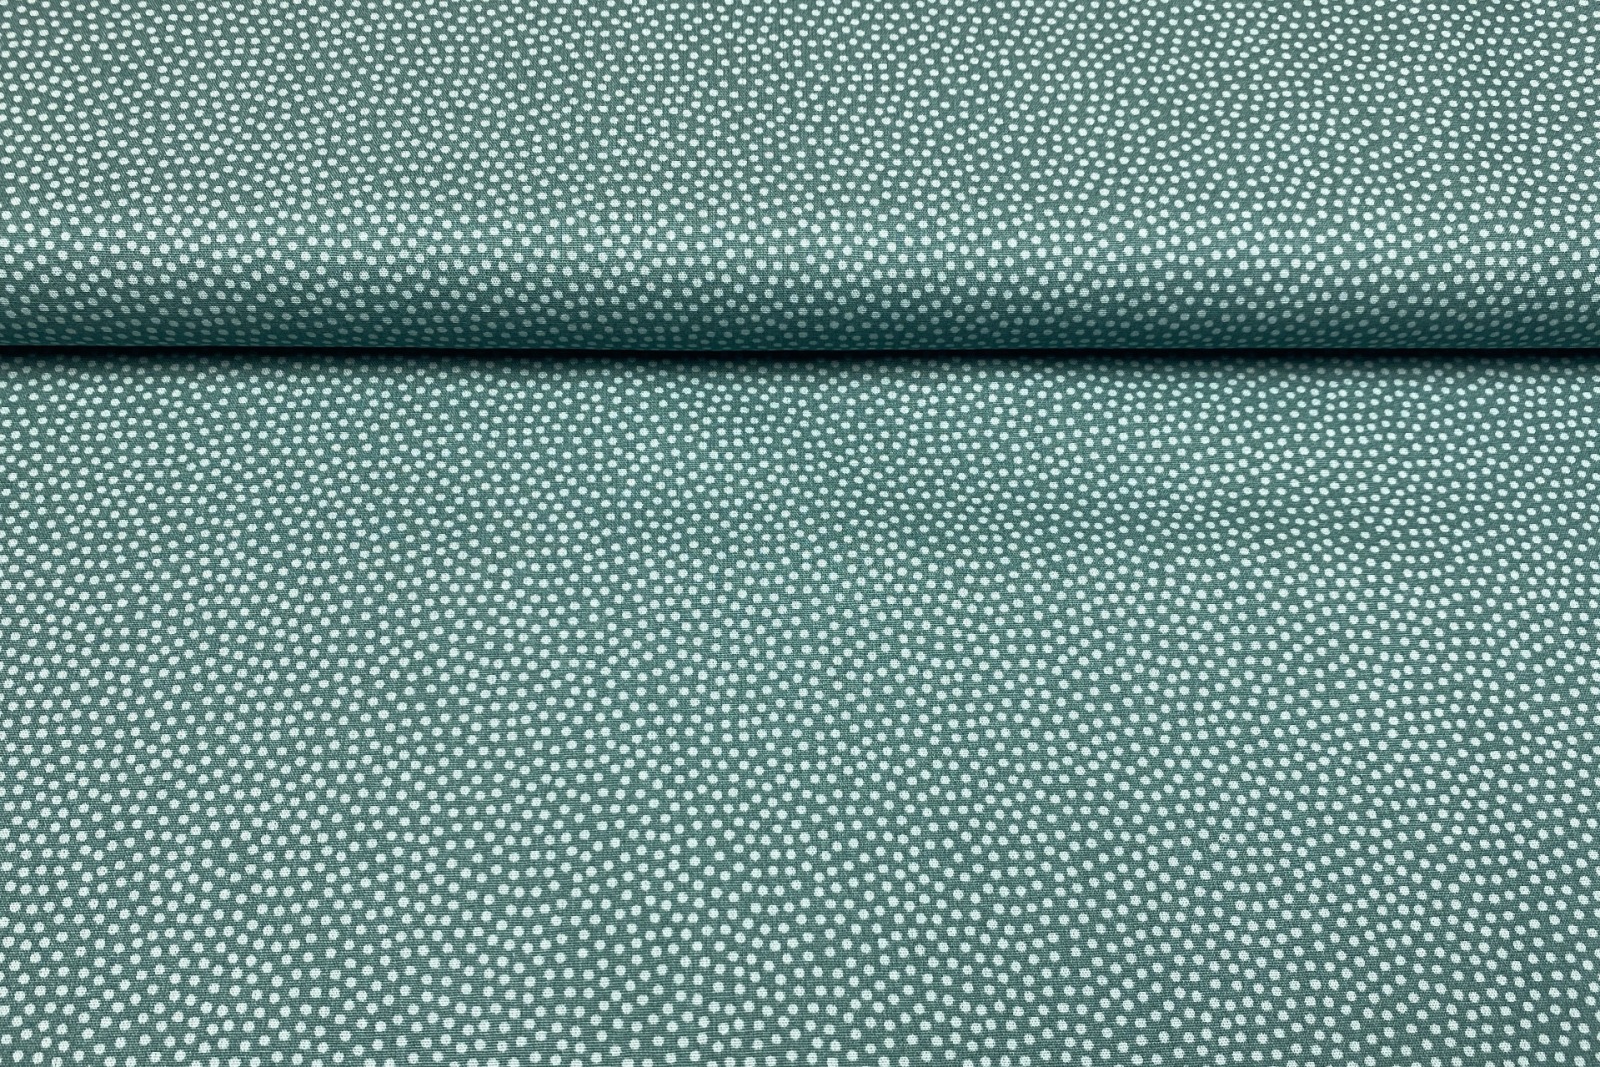 Baumwollwebware - unregelmäßige Punkte - smaragd - 100 Baumwolle - Dotty - Swafing 2